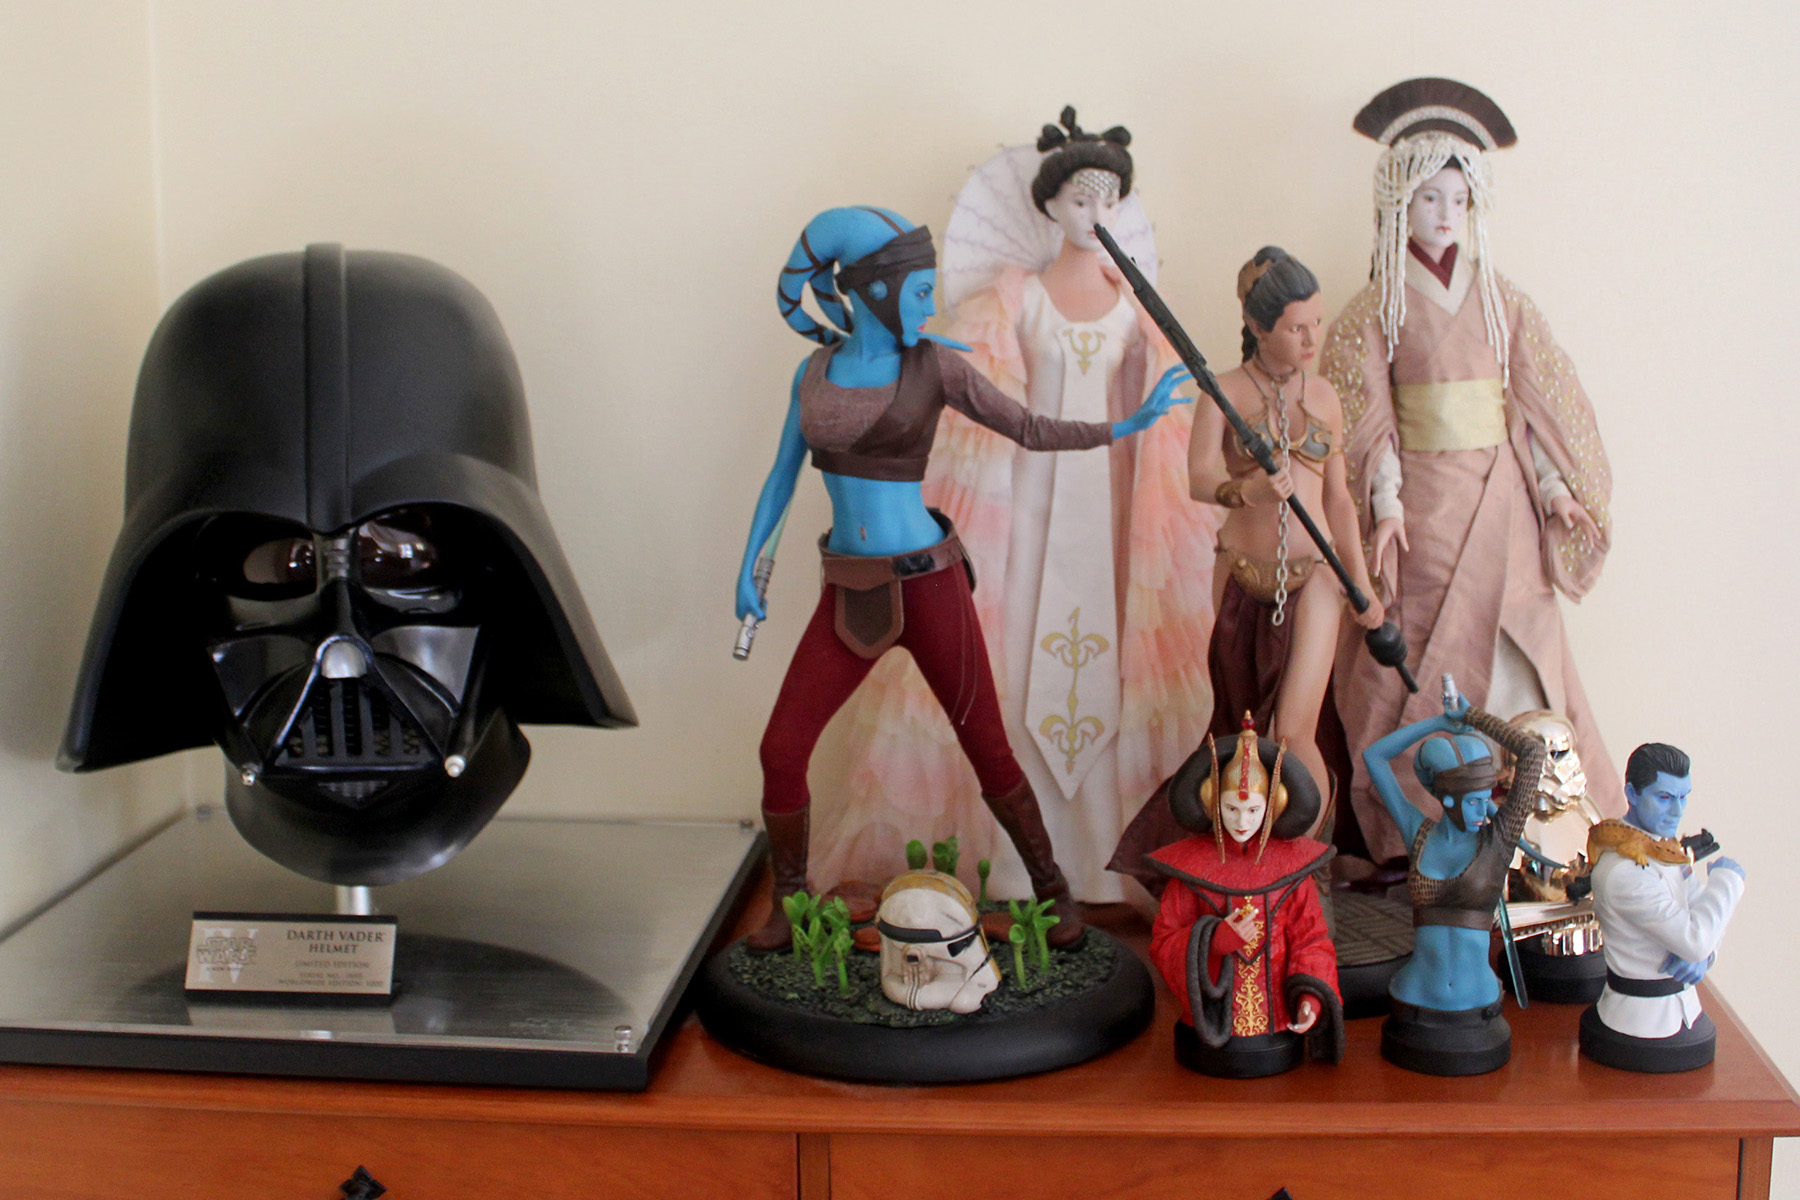 Darth Vader helmet (eFX Collectibles), Sideshow Premium Format statues, Tonner dolls